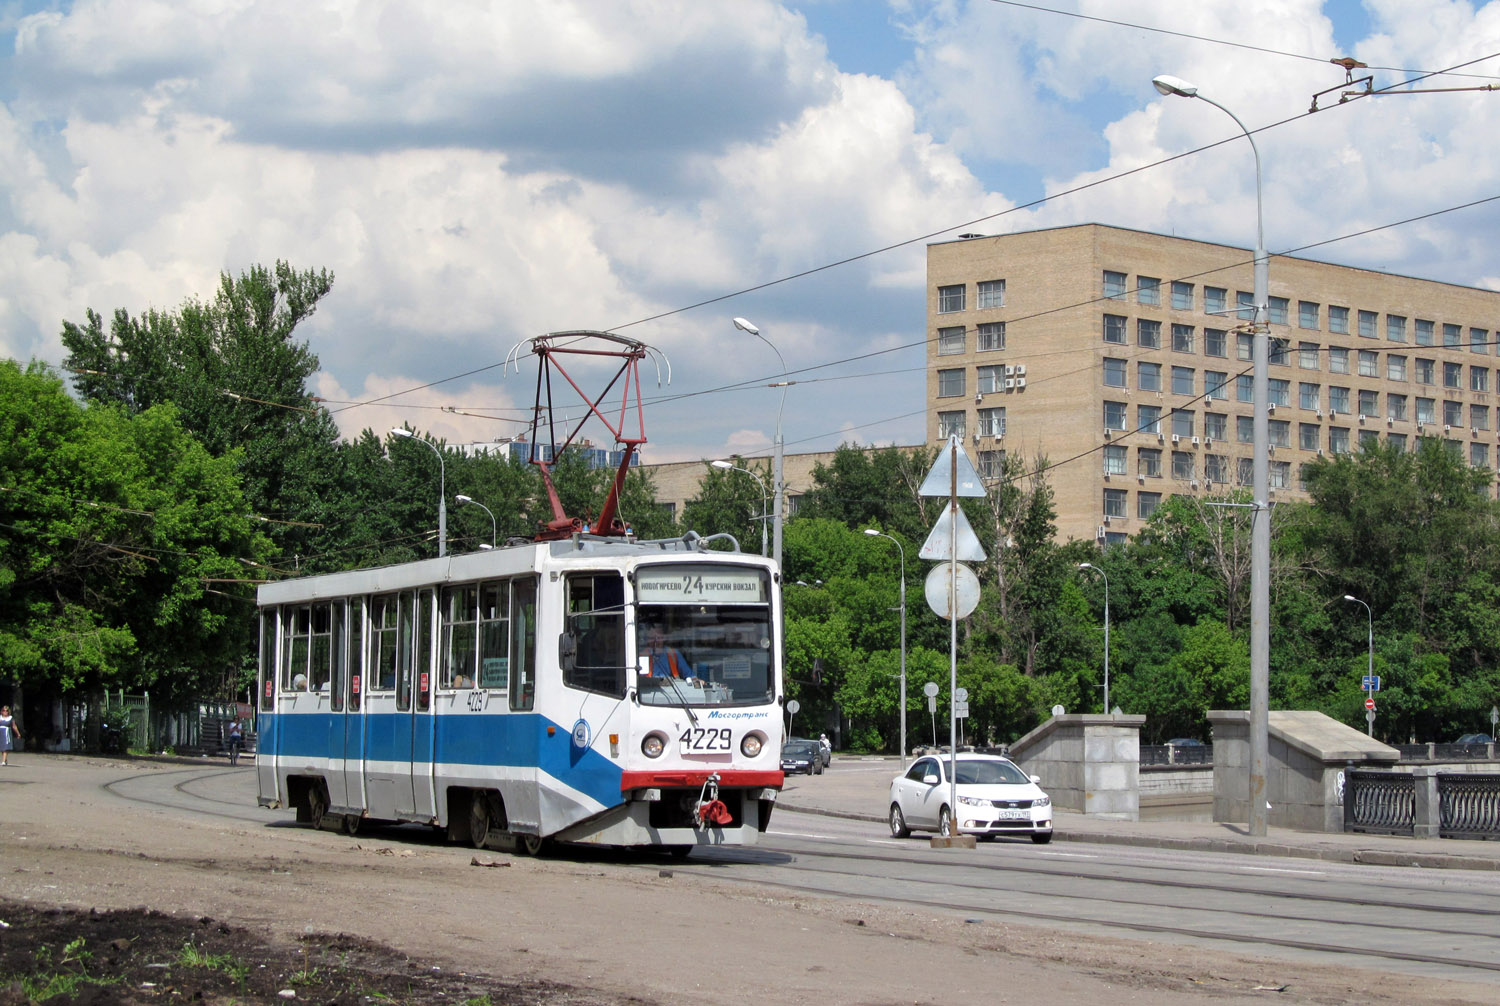 Moskwa, 71-608KM Nr 4229